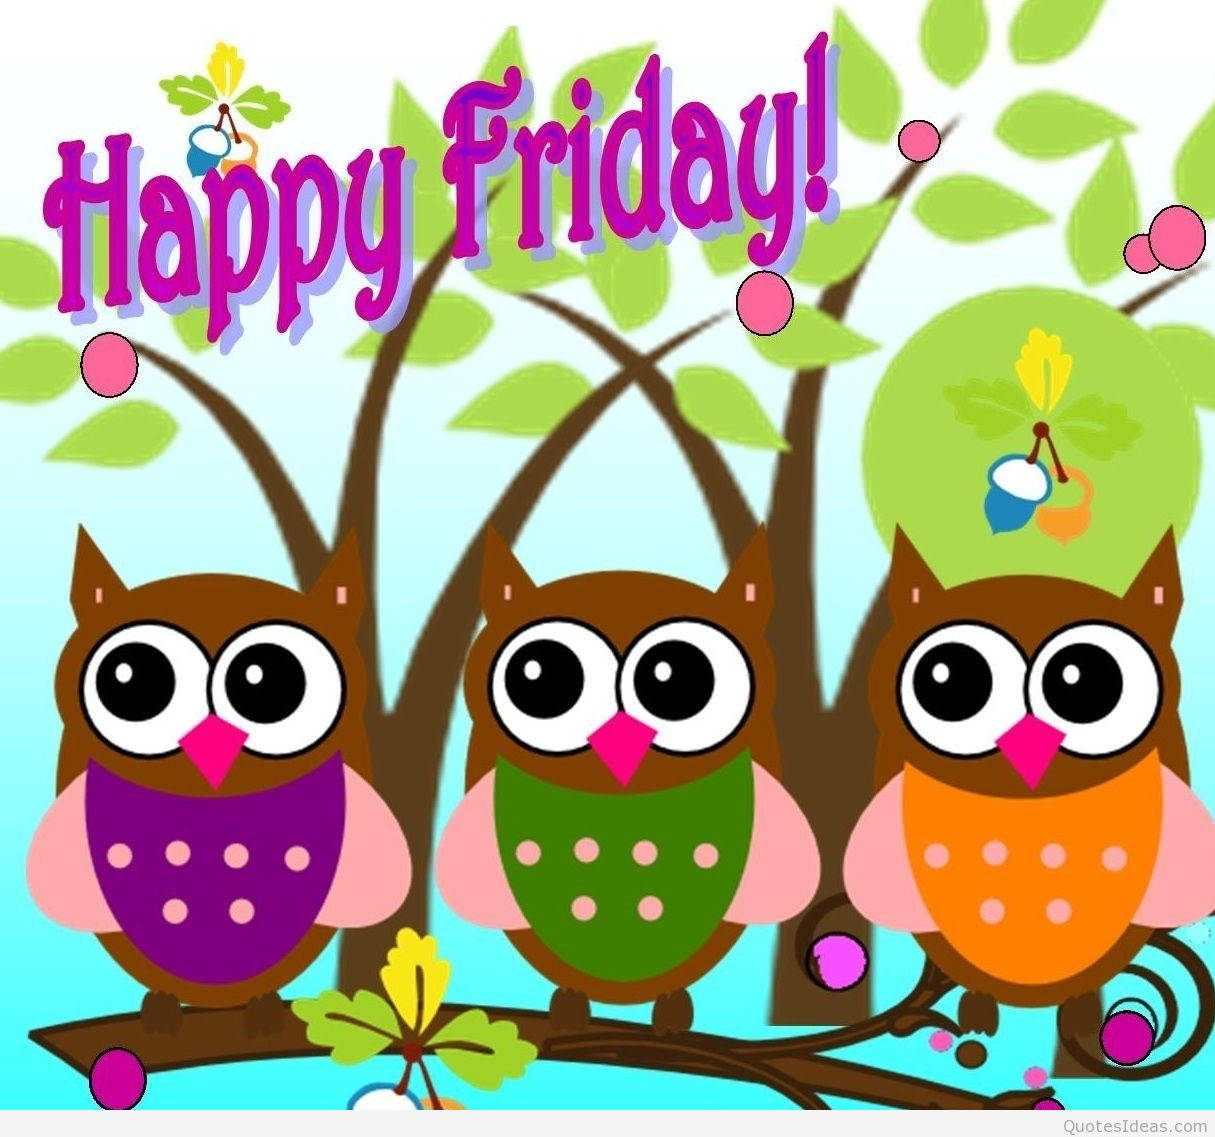 Happy Friday Owls Background